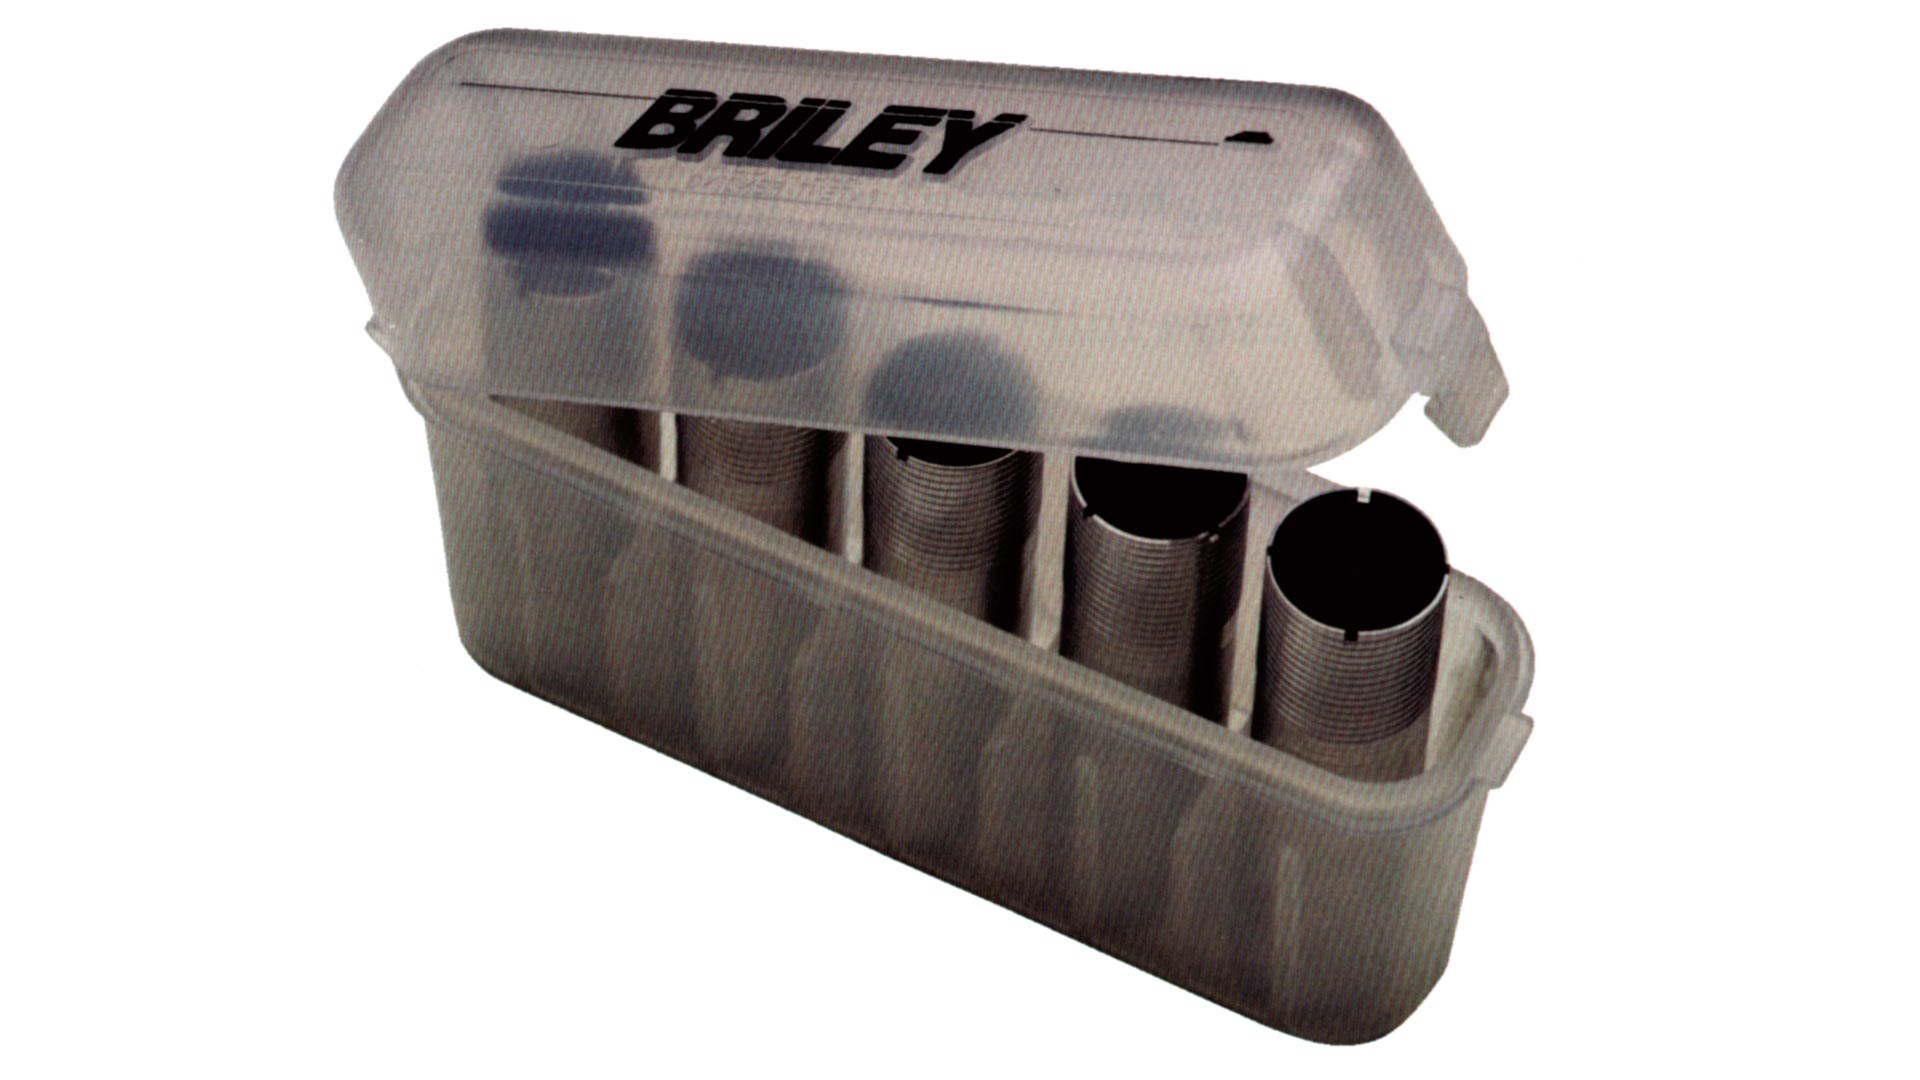 Briley shotgun choke tube accessory box